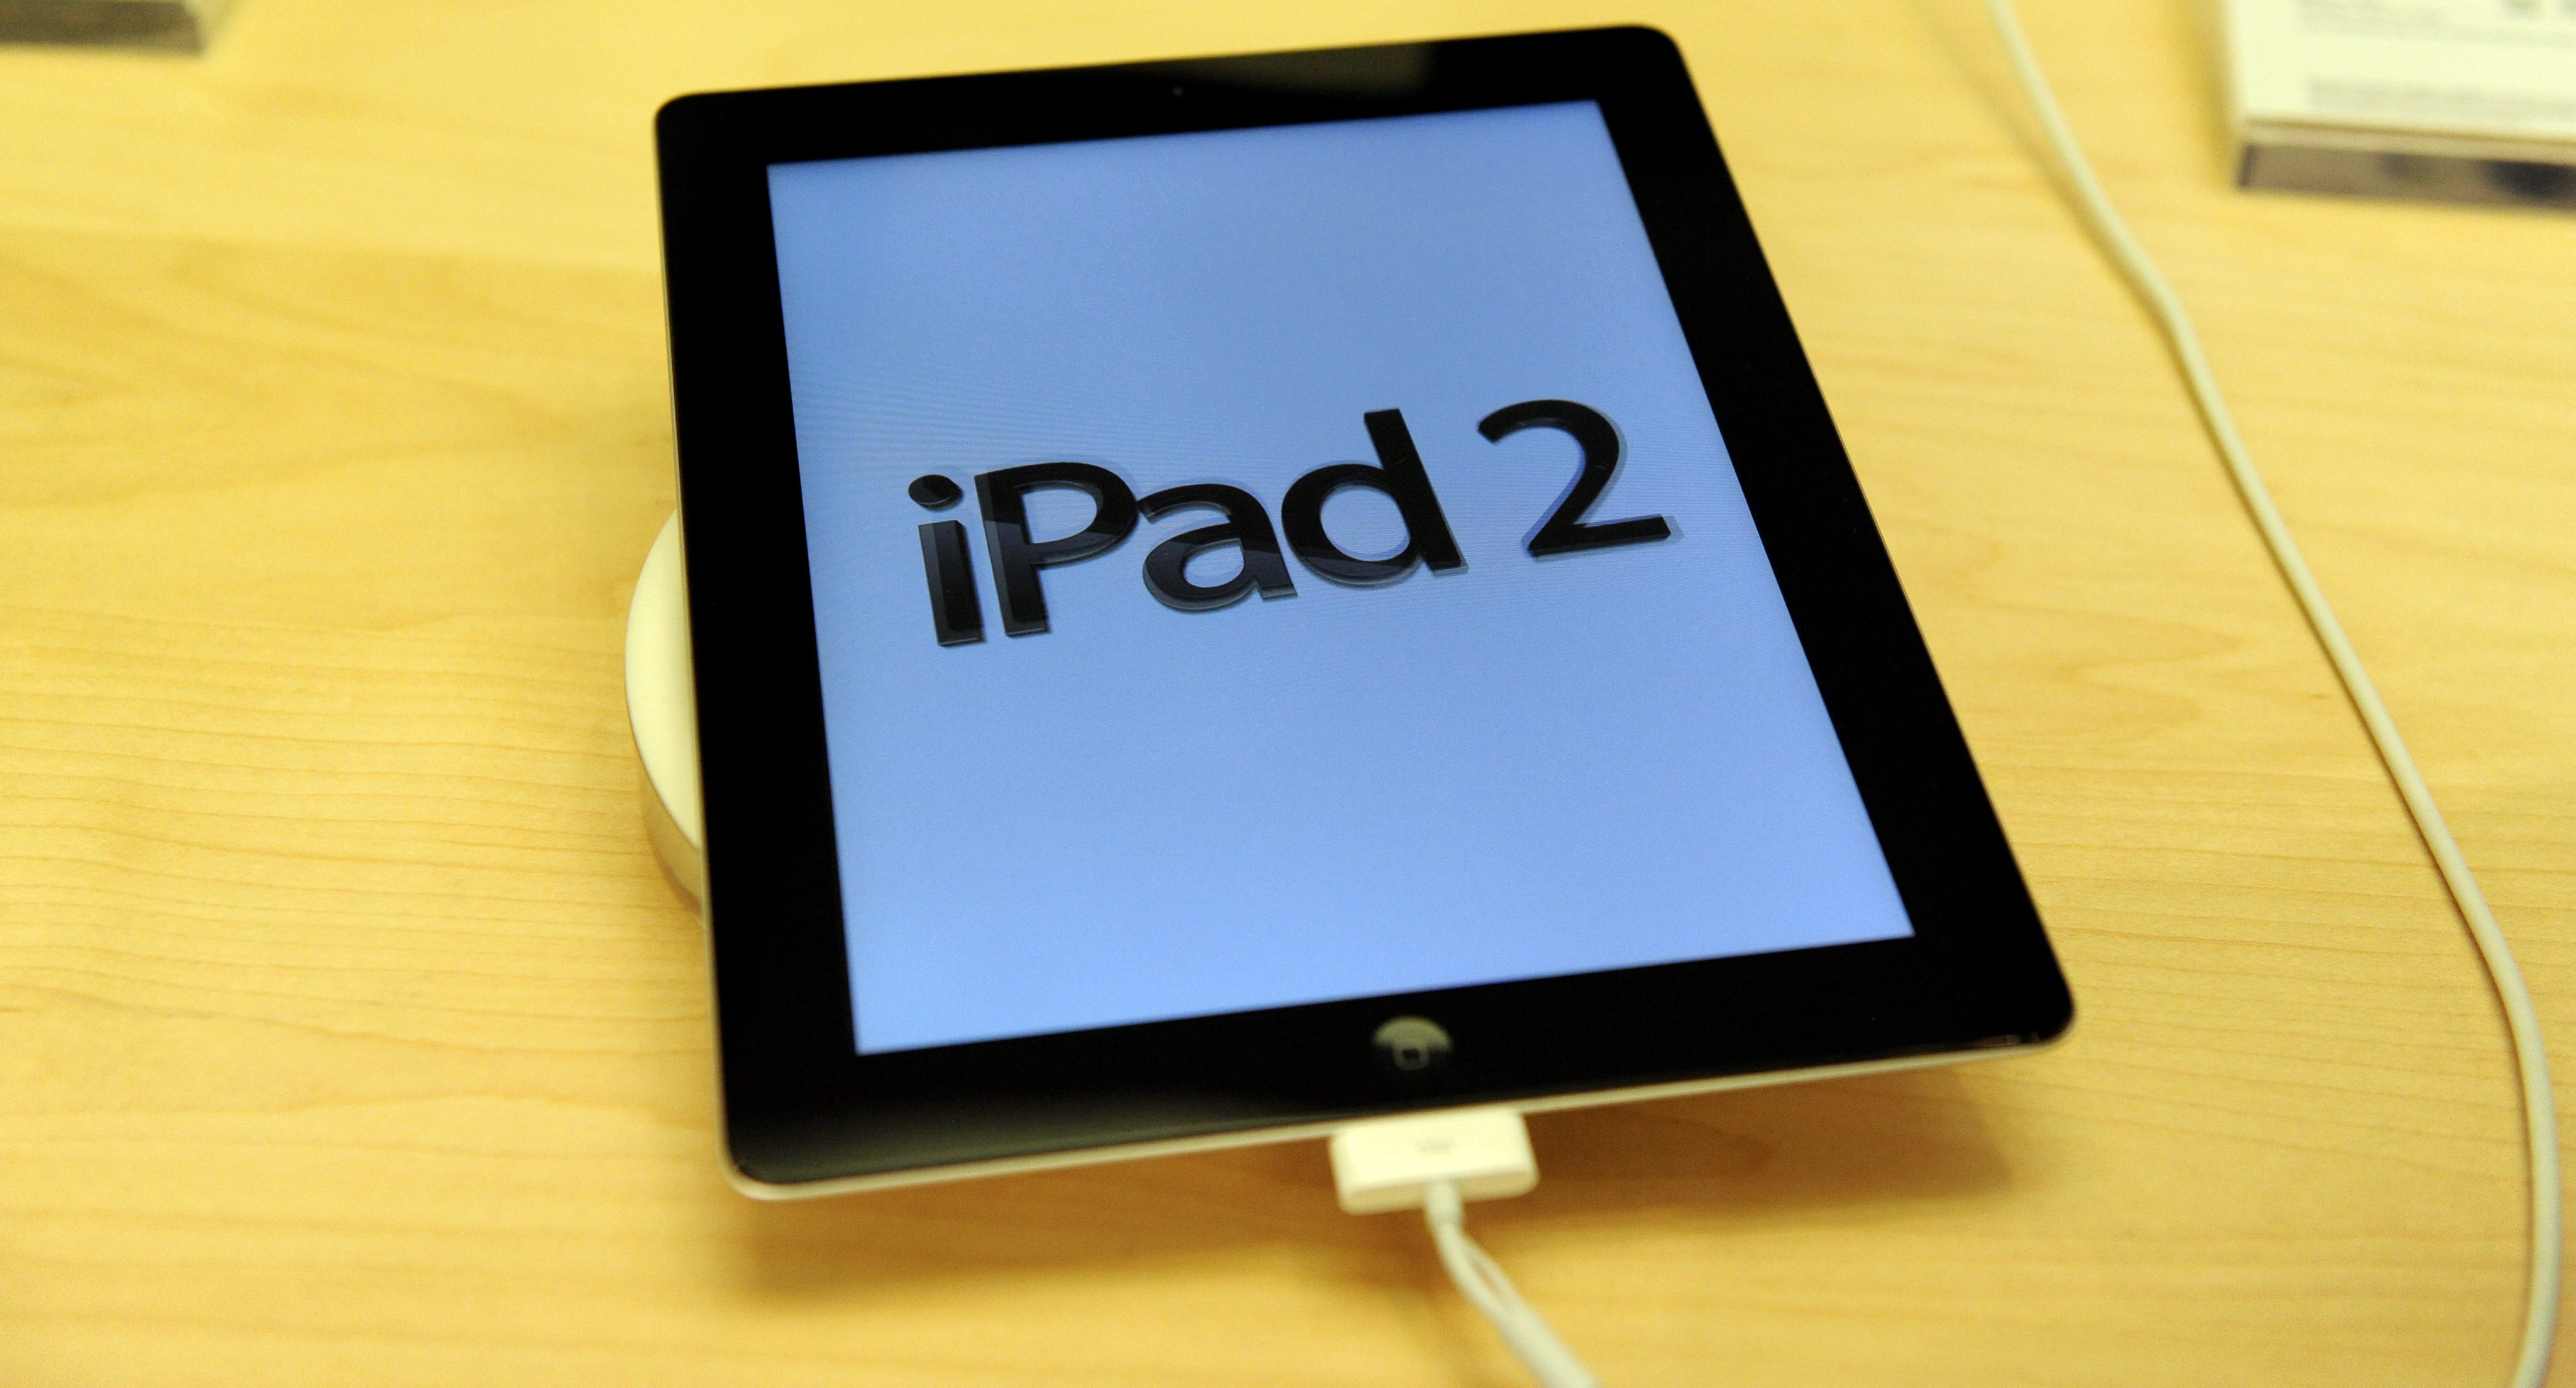 Очаква се Apple да пусне евтин модел iPad 2 само с 8 GB памет, за да конкурира Windows 8 таблетите